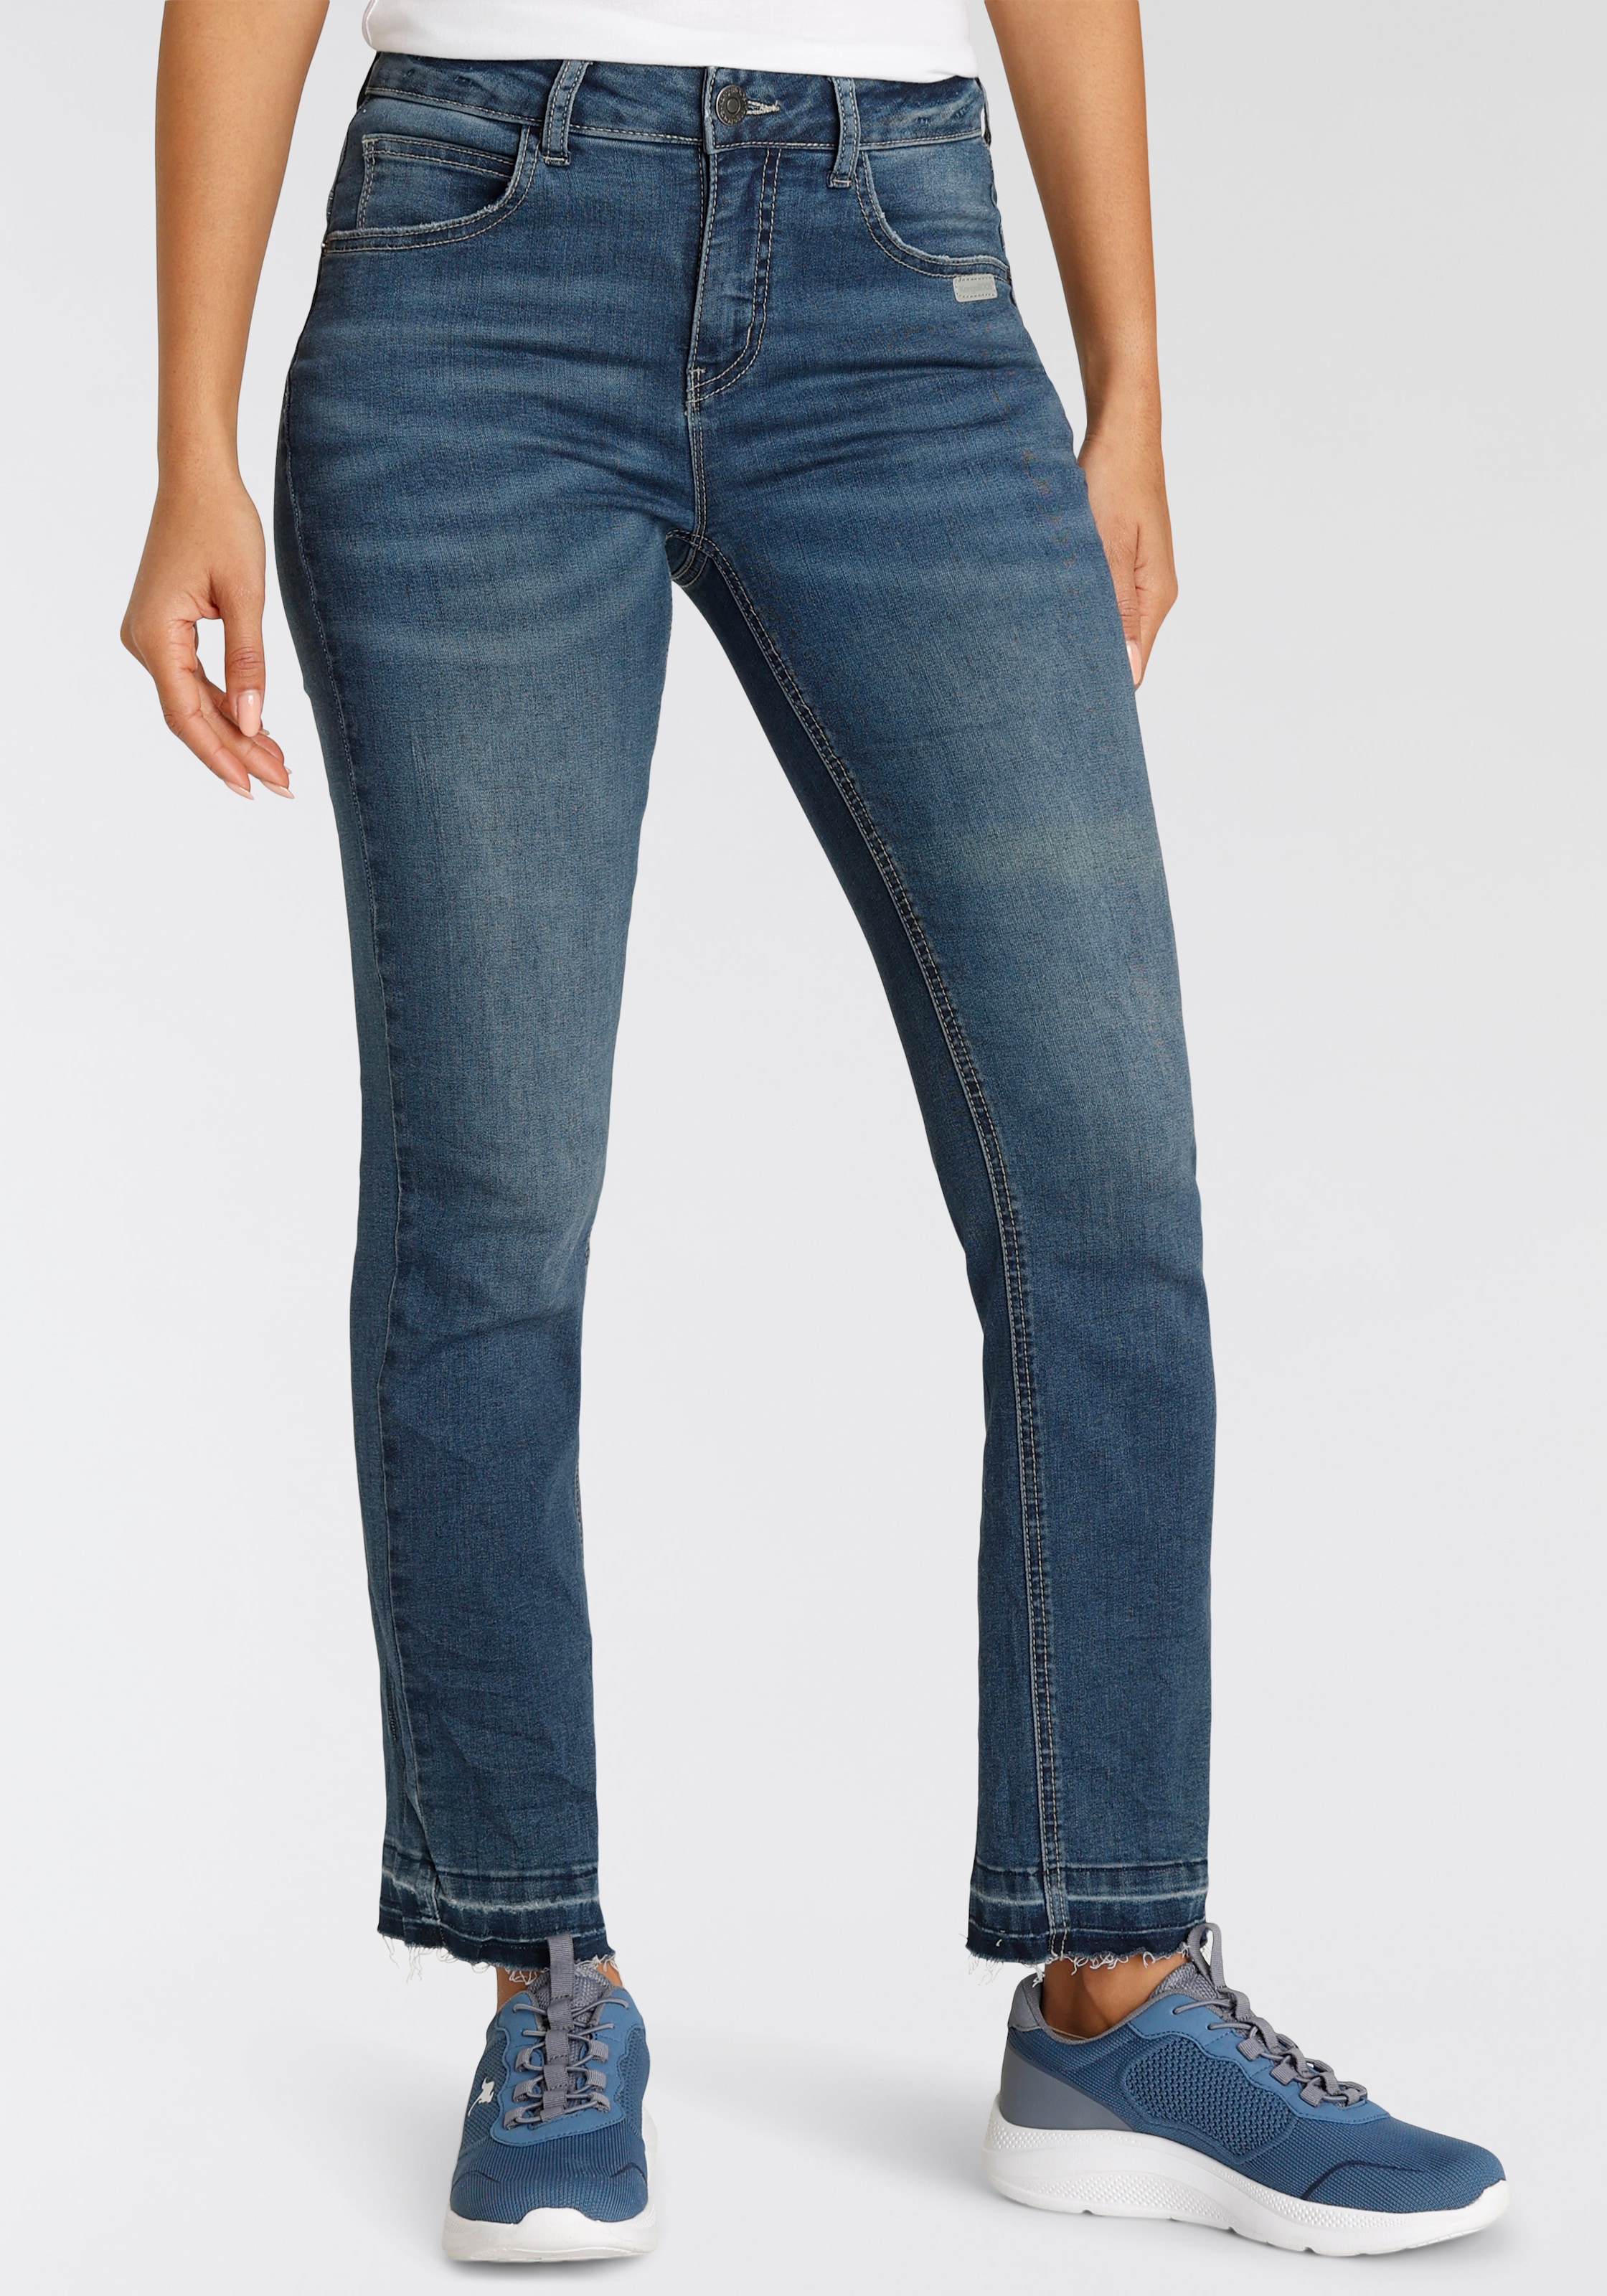 - Mode Jeans Damen online günstige bestellen 7/8